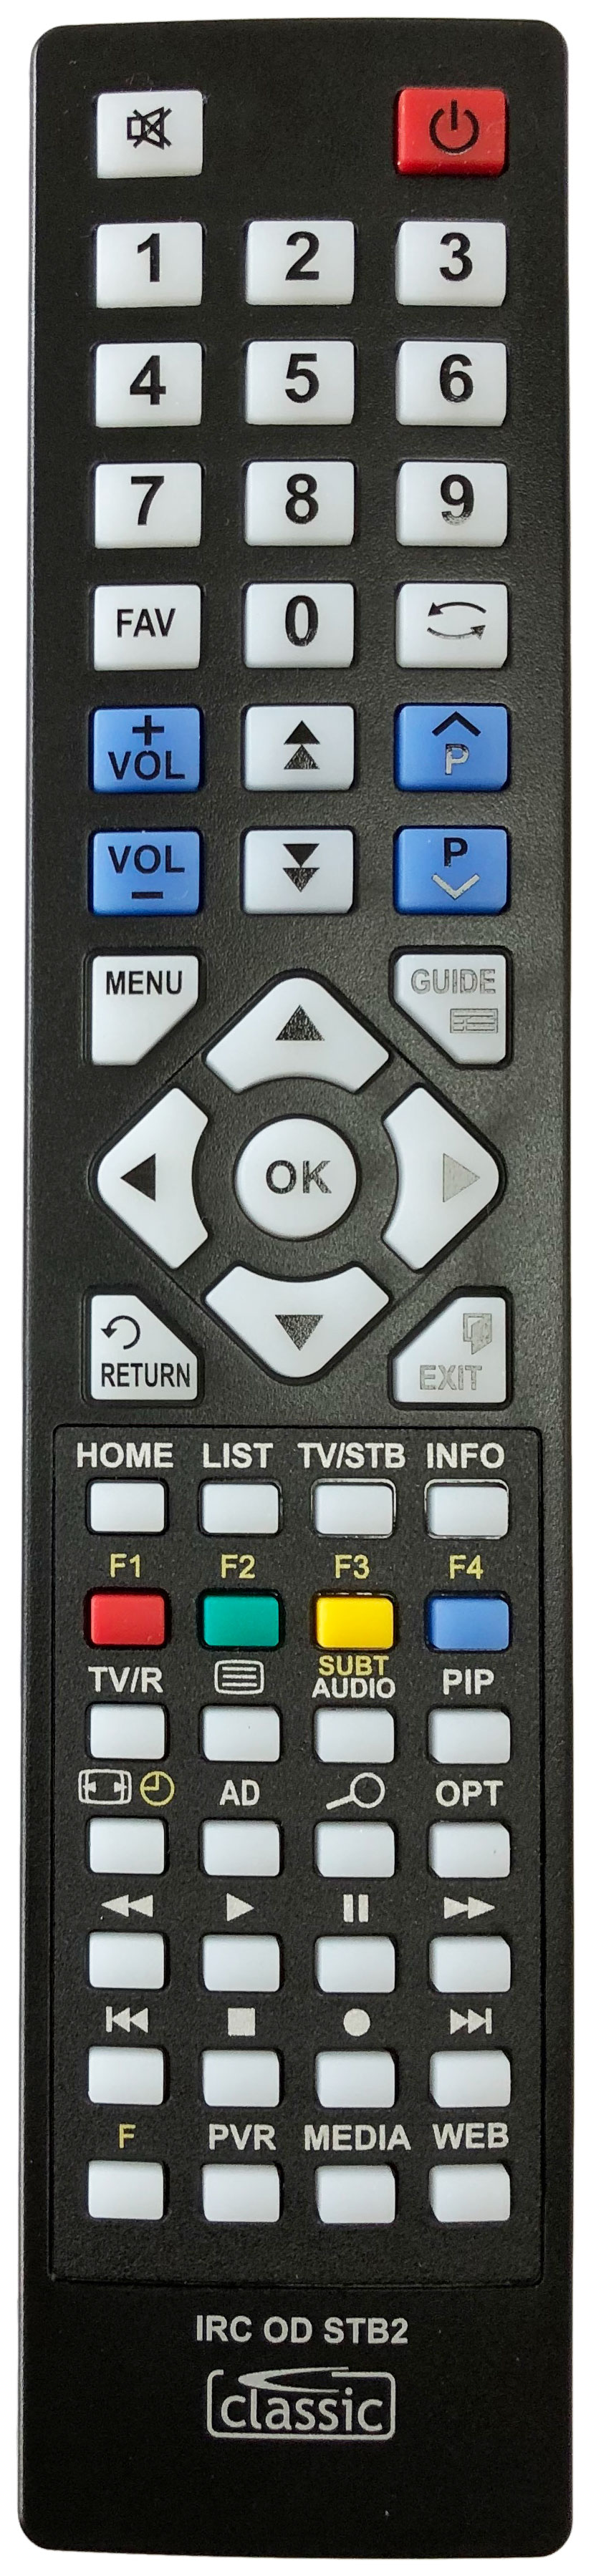 HUMAX PVR9300T 500GB Remote Control Alternative